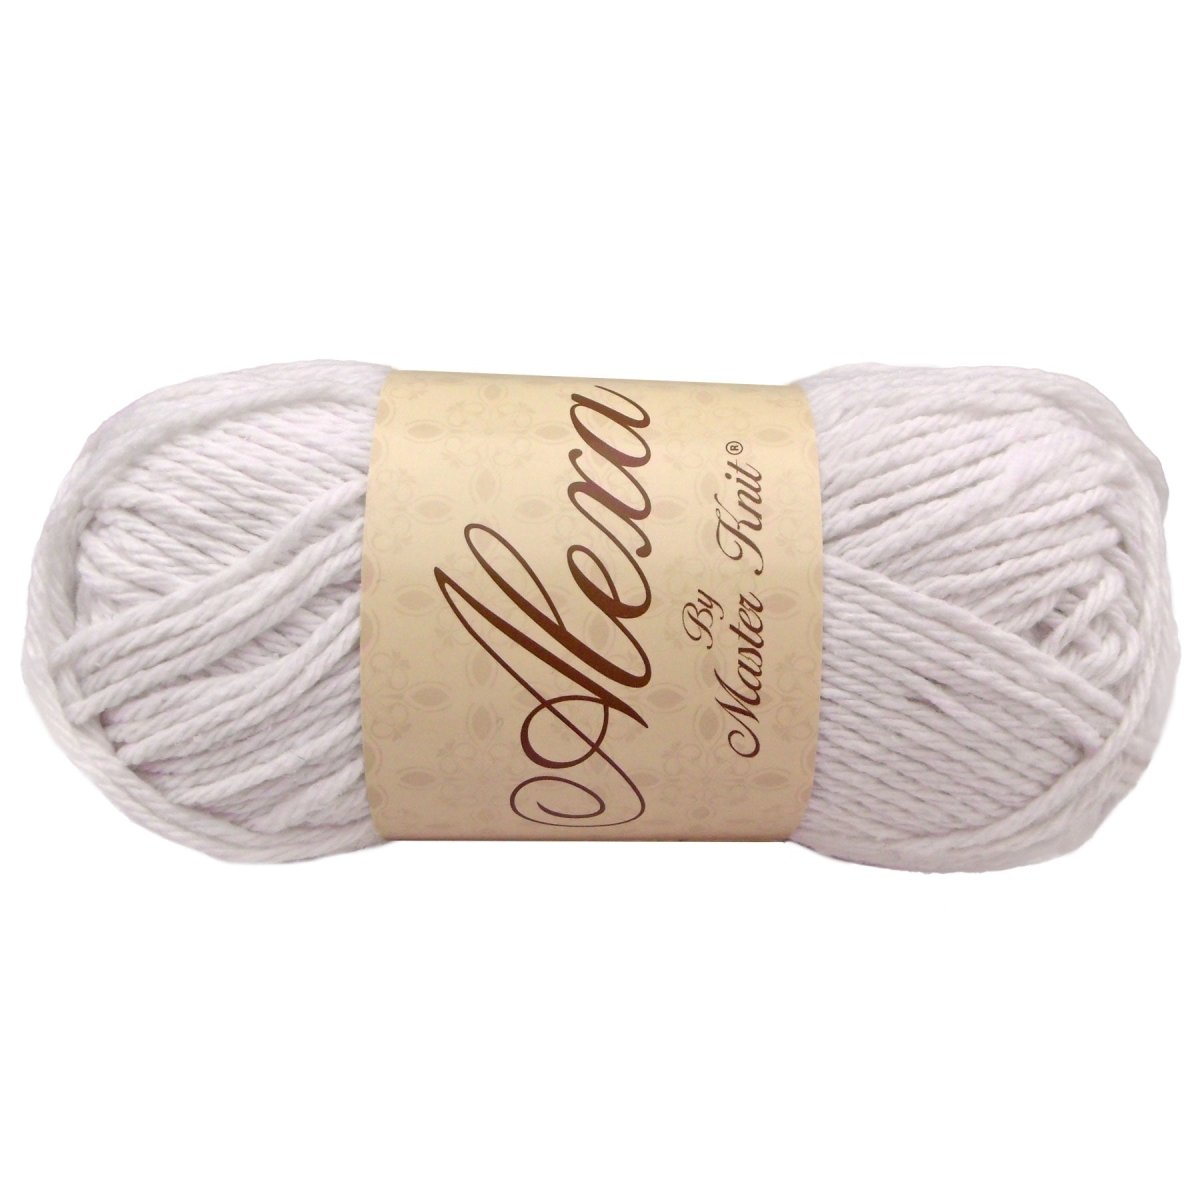 ALEXA - Crochetstores9340-010